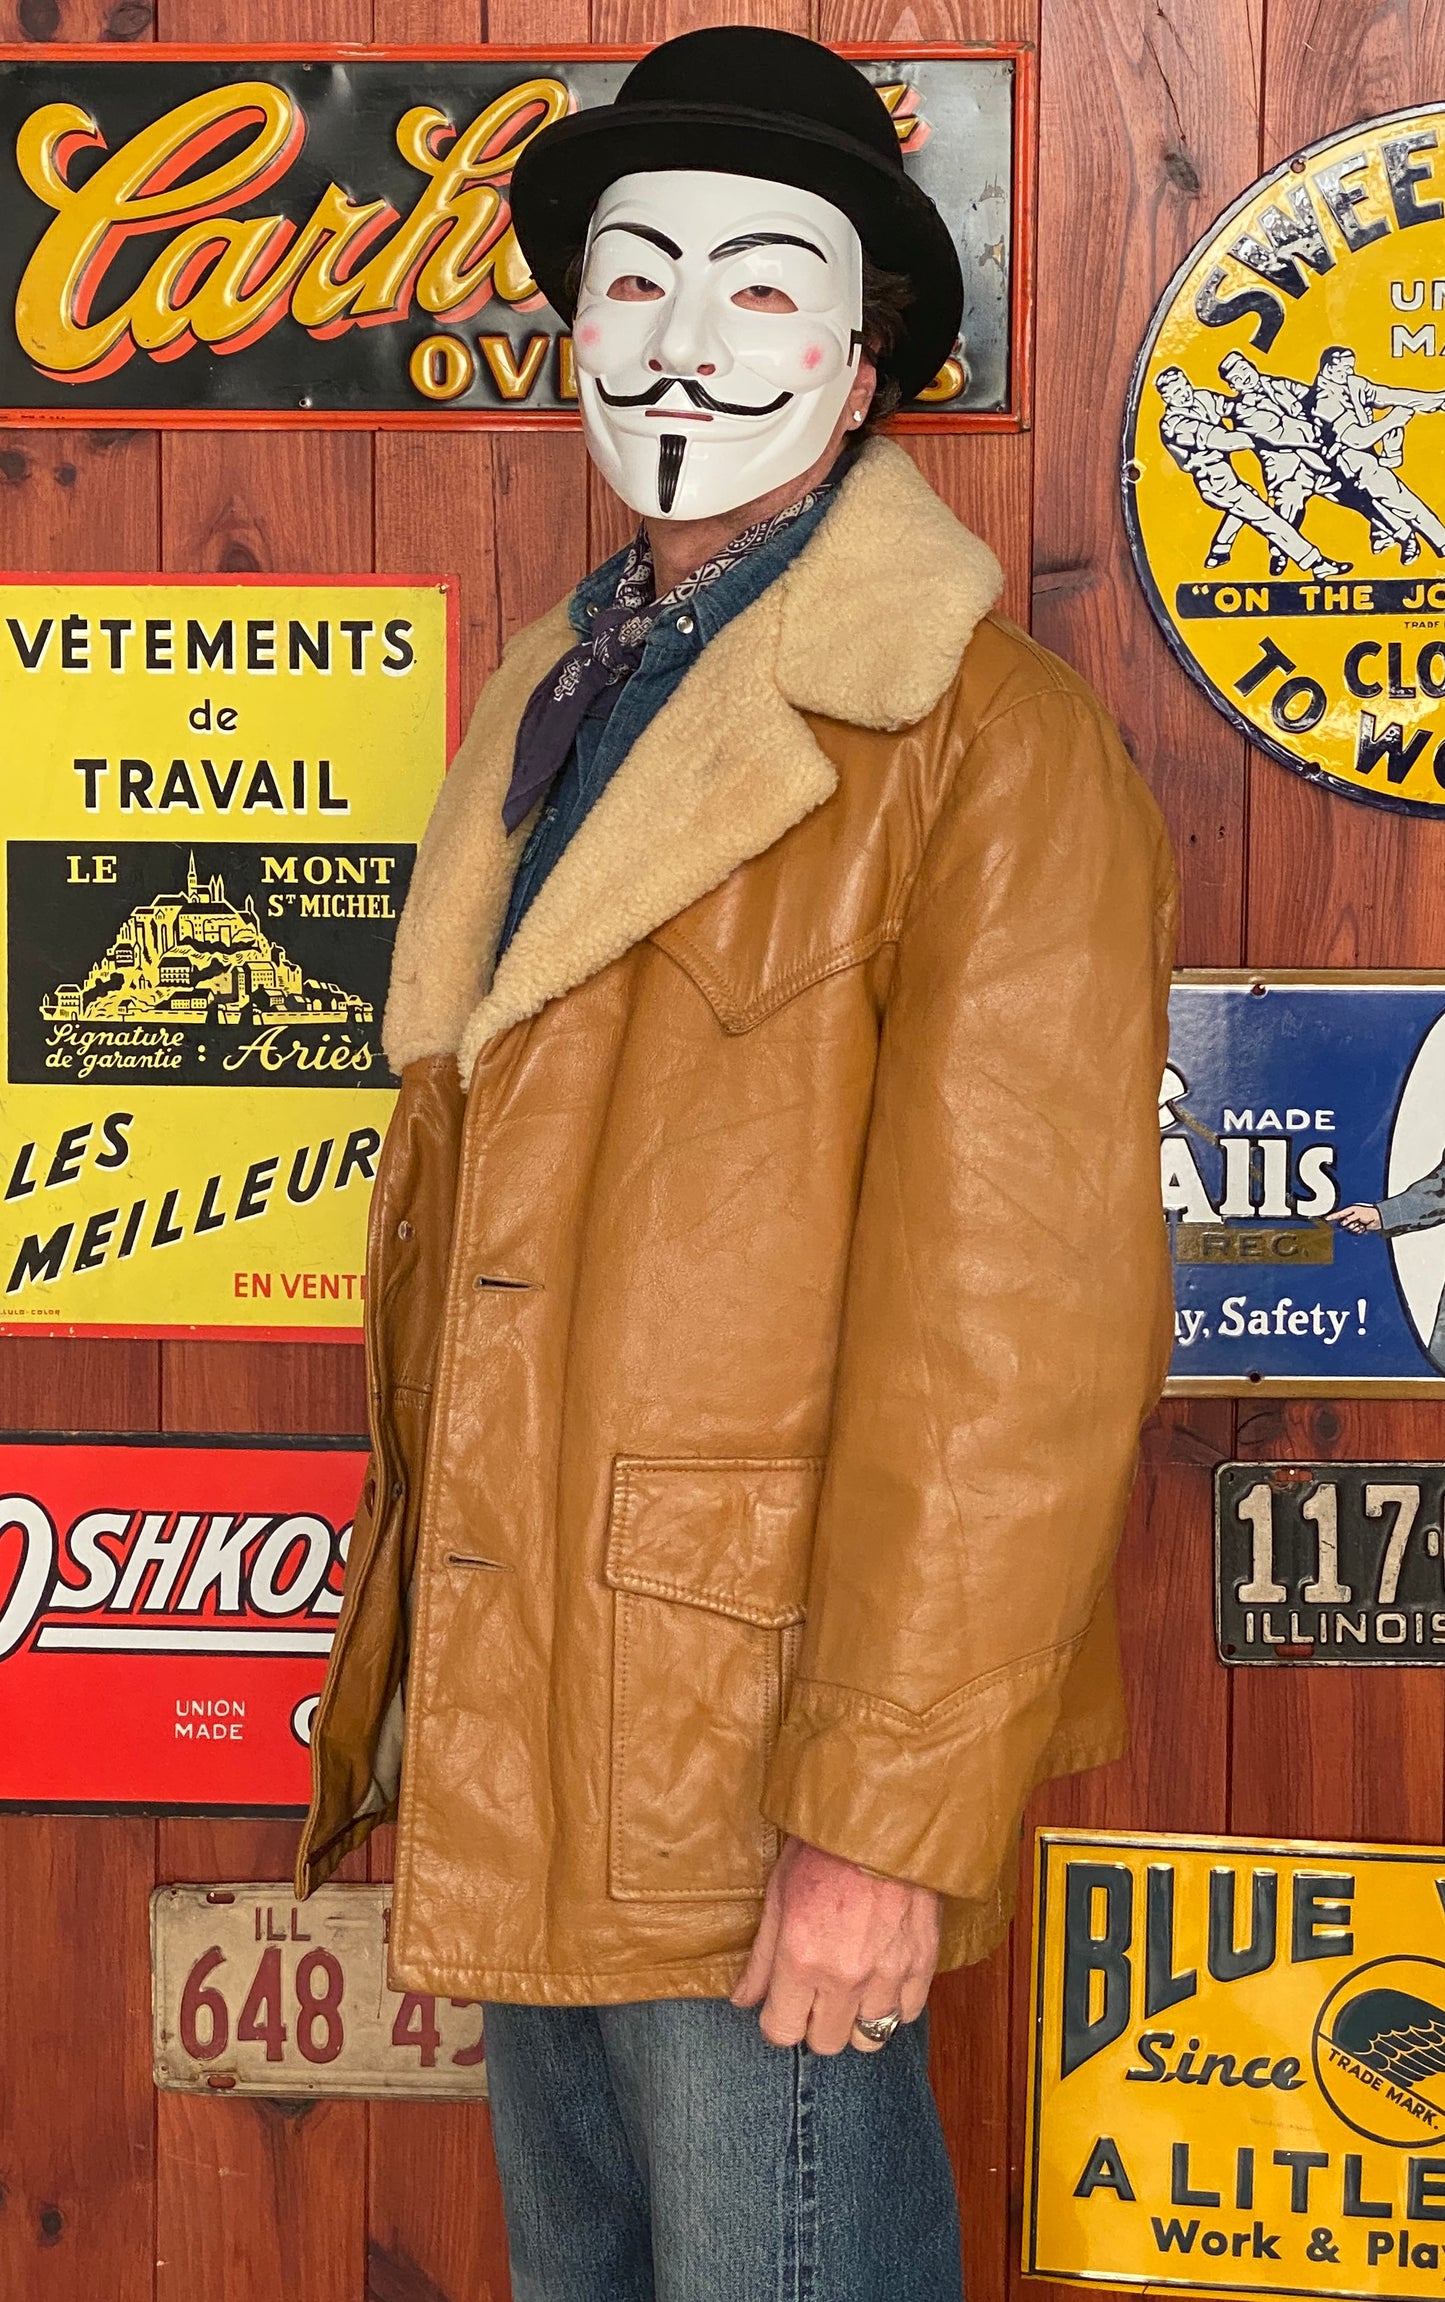 Vintage Schott Bros Jacket - Size 44 US (54 EU) | Made in USA